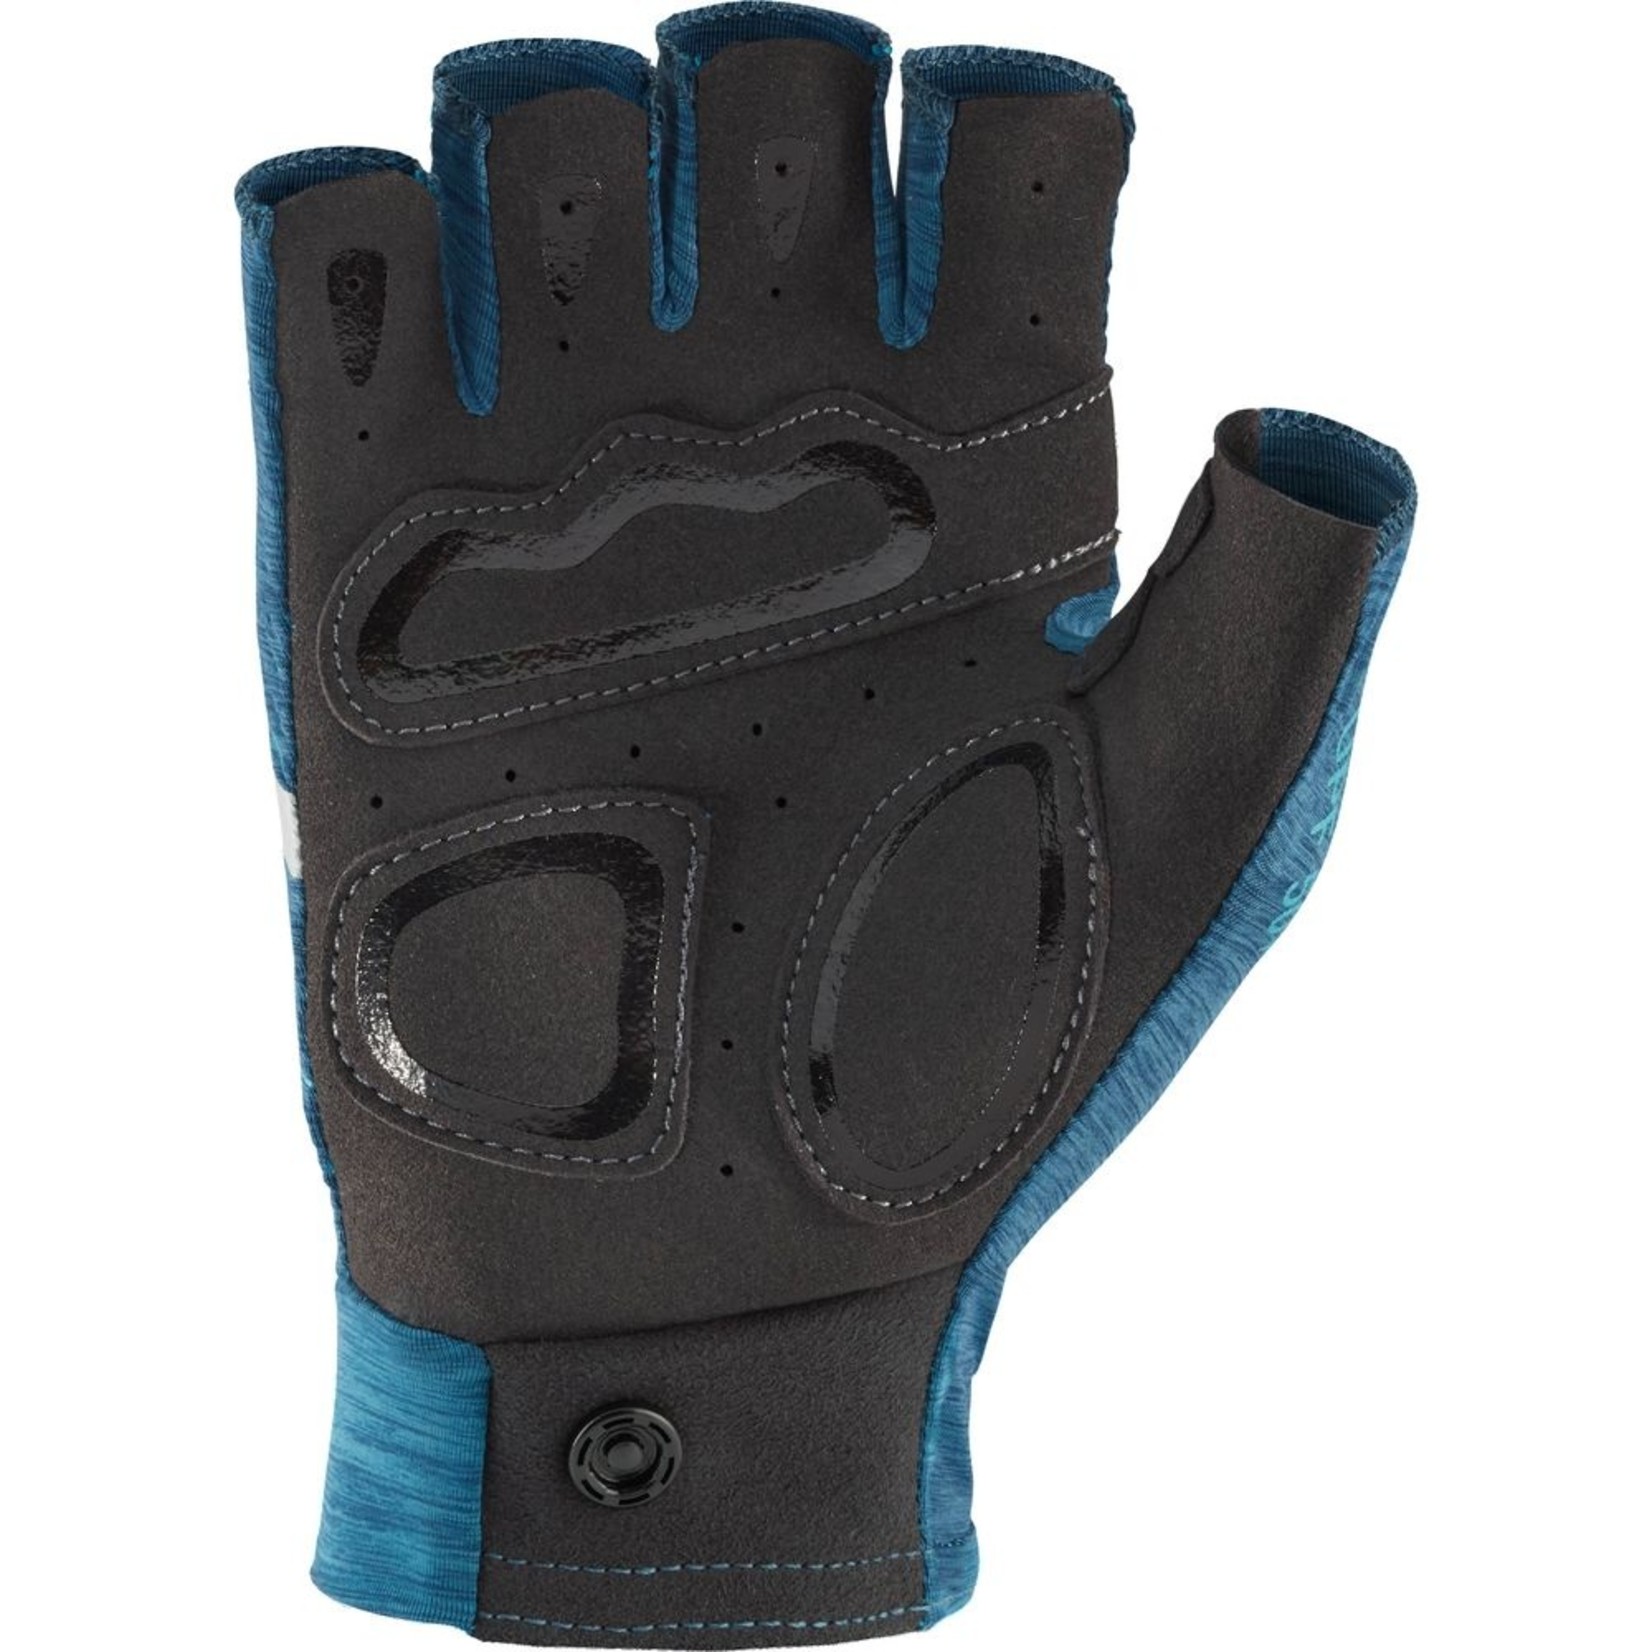 NRS Men's Boater's Gloves XS